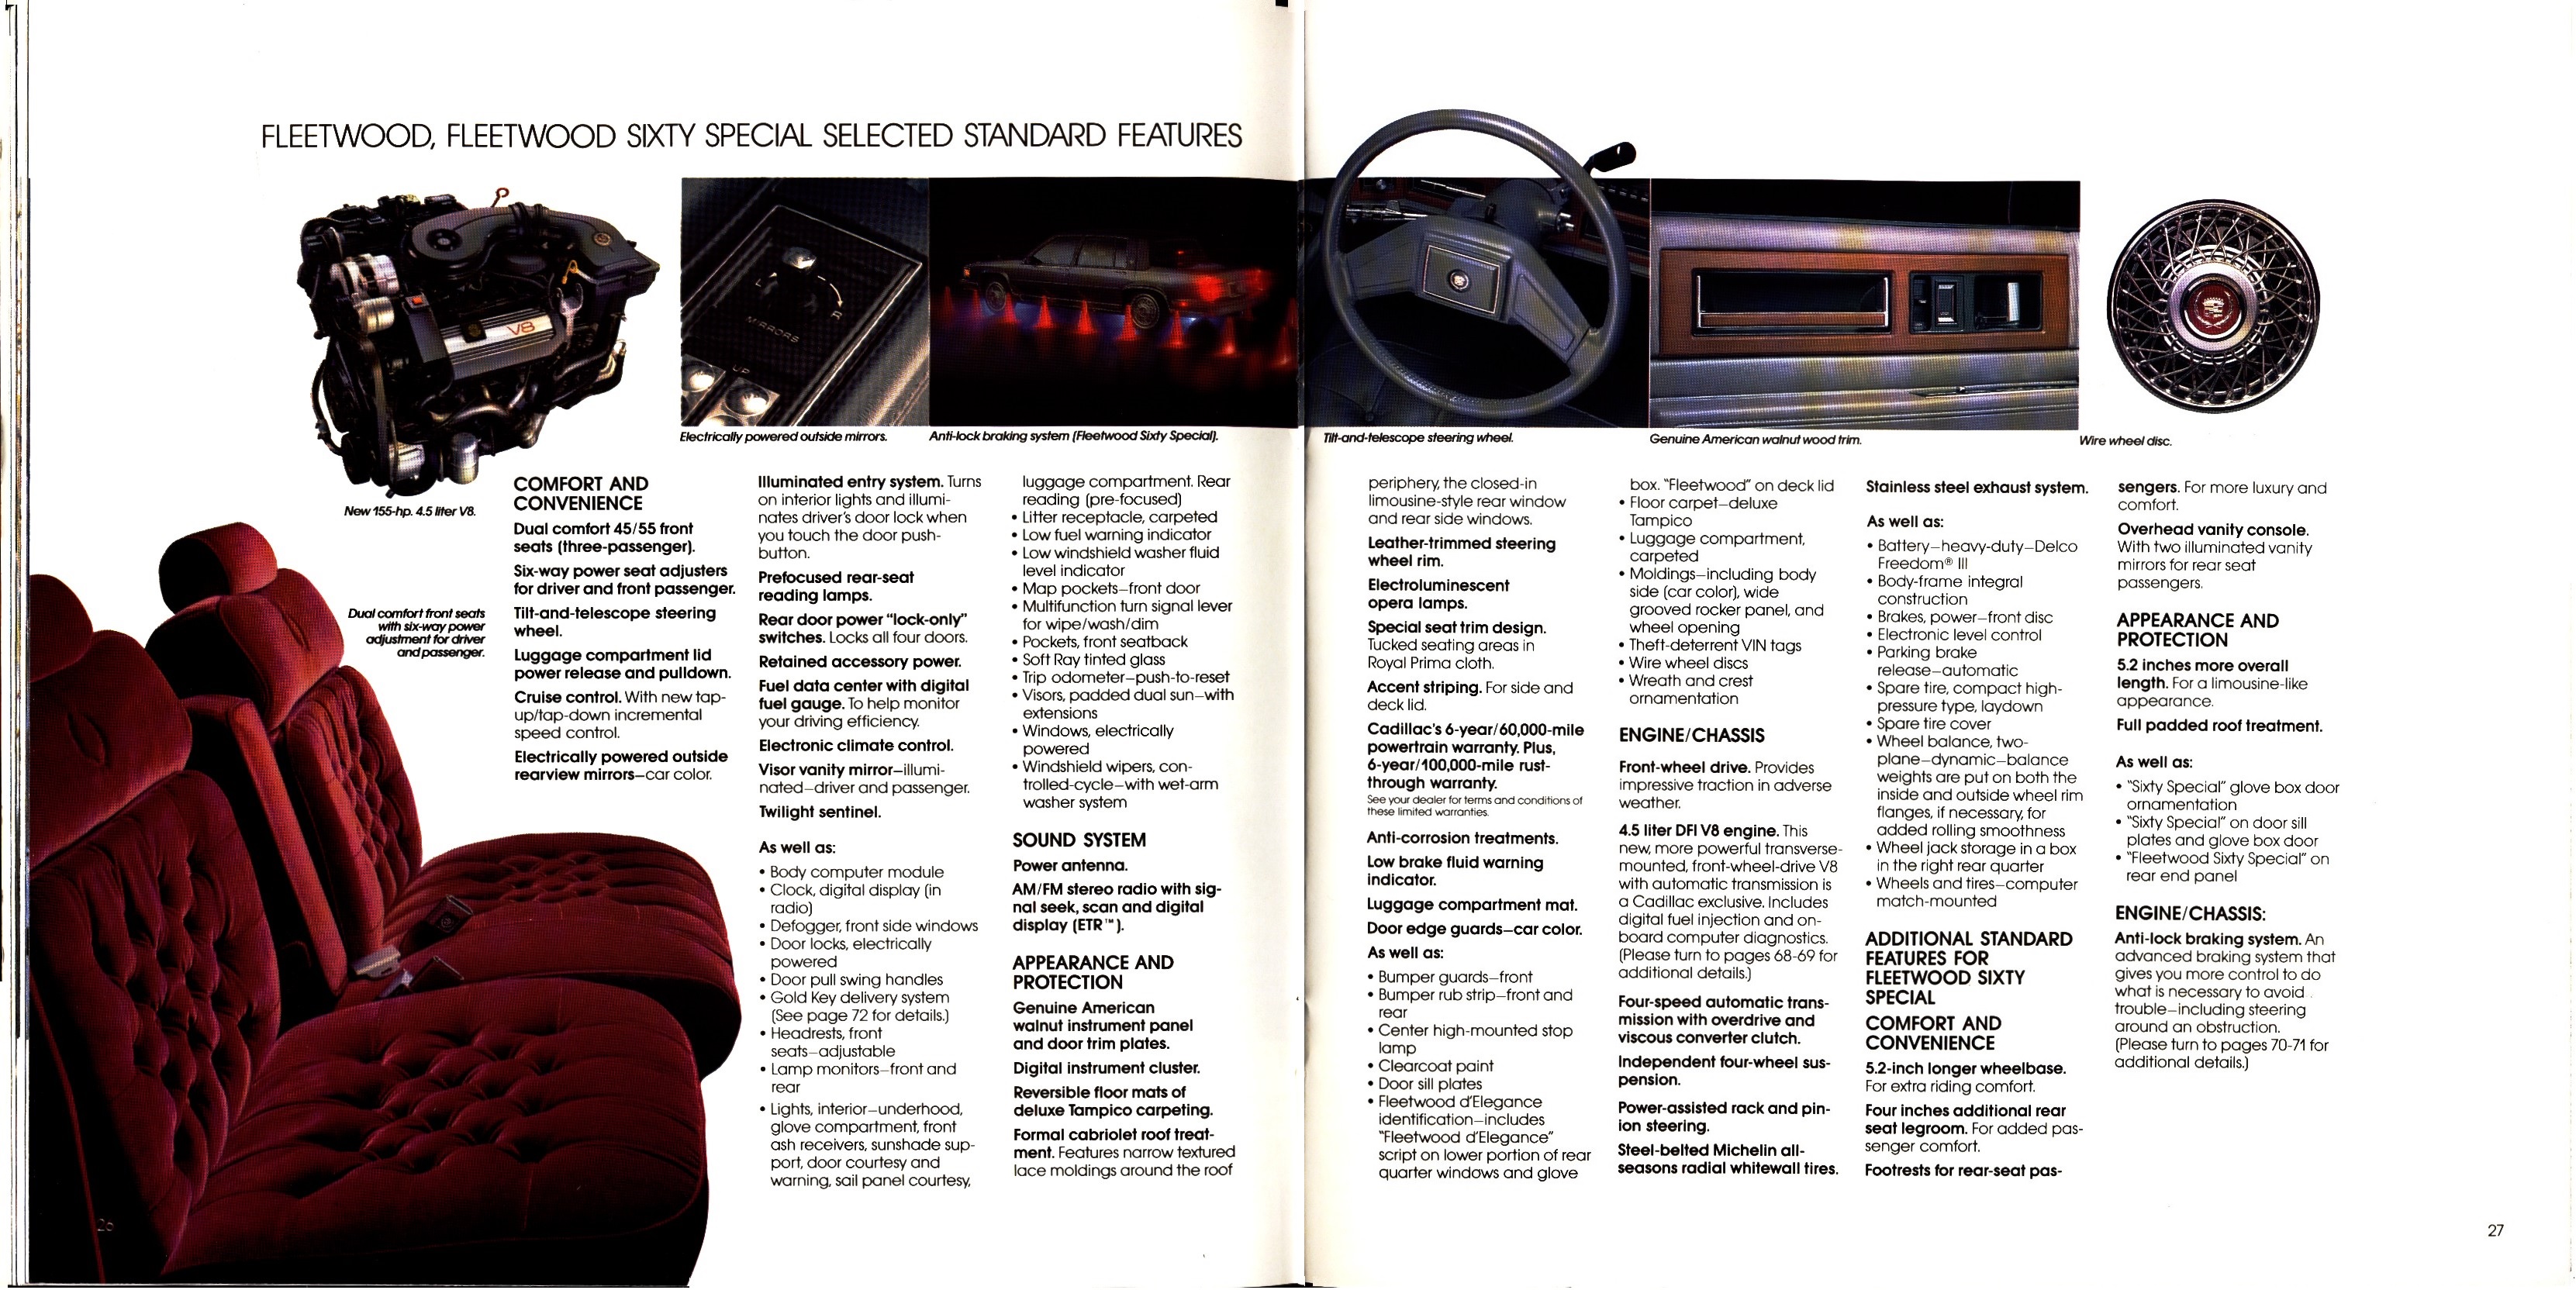 1988 Cadillac Full Line Prestige Brochure 26-27